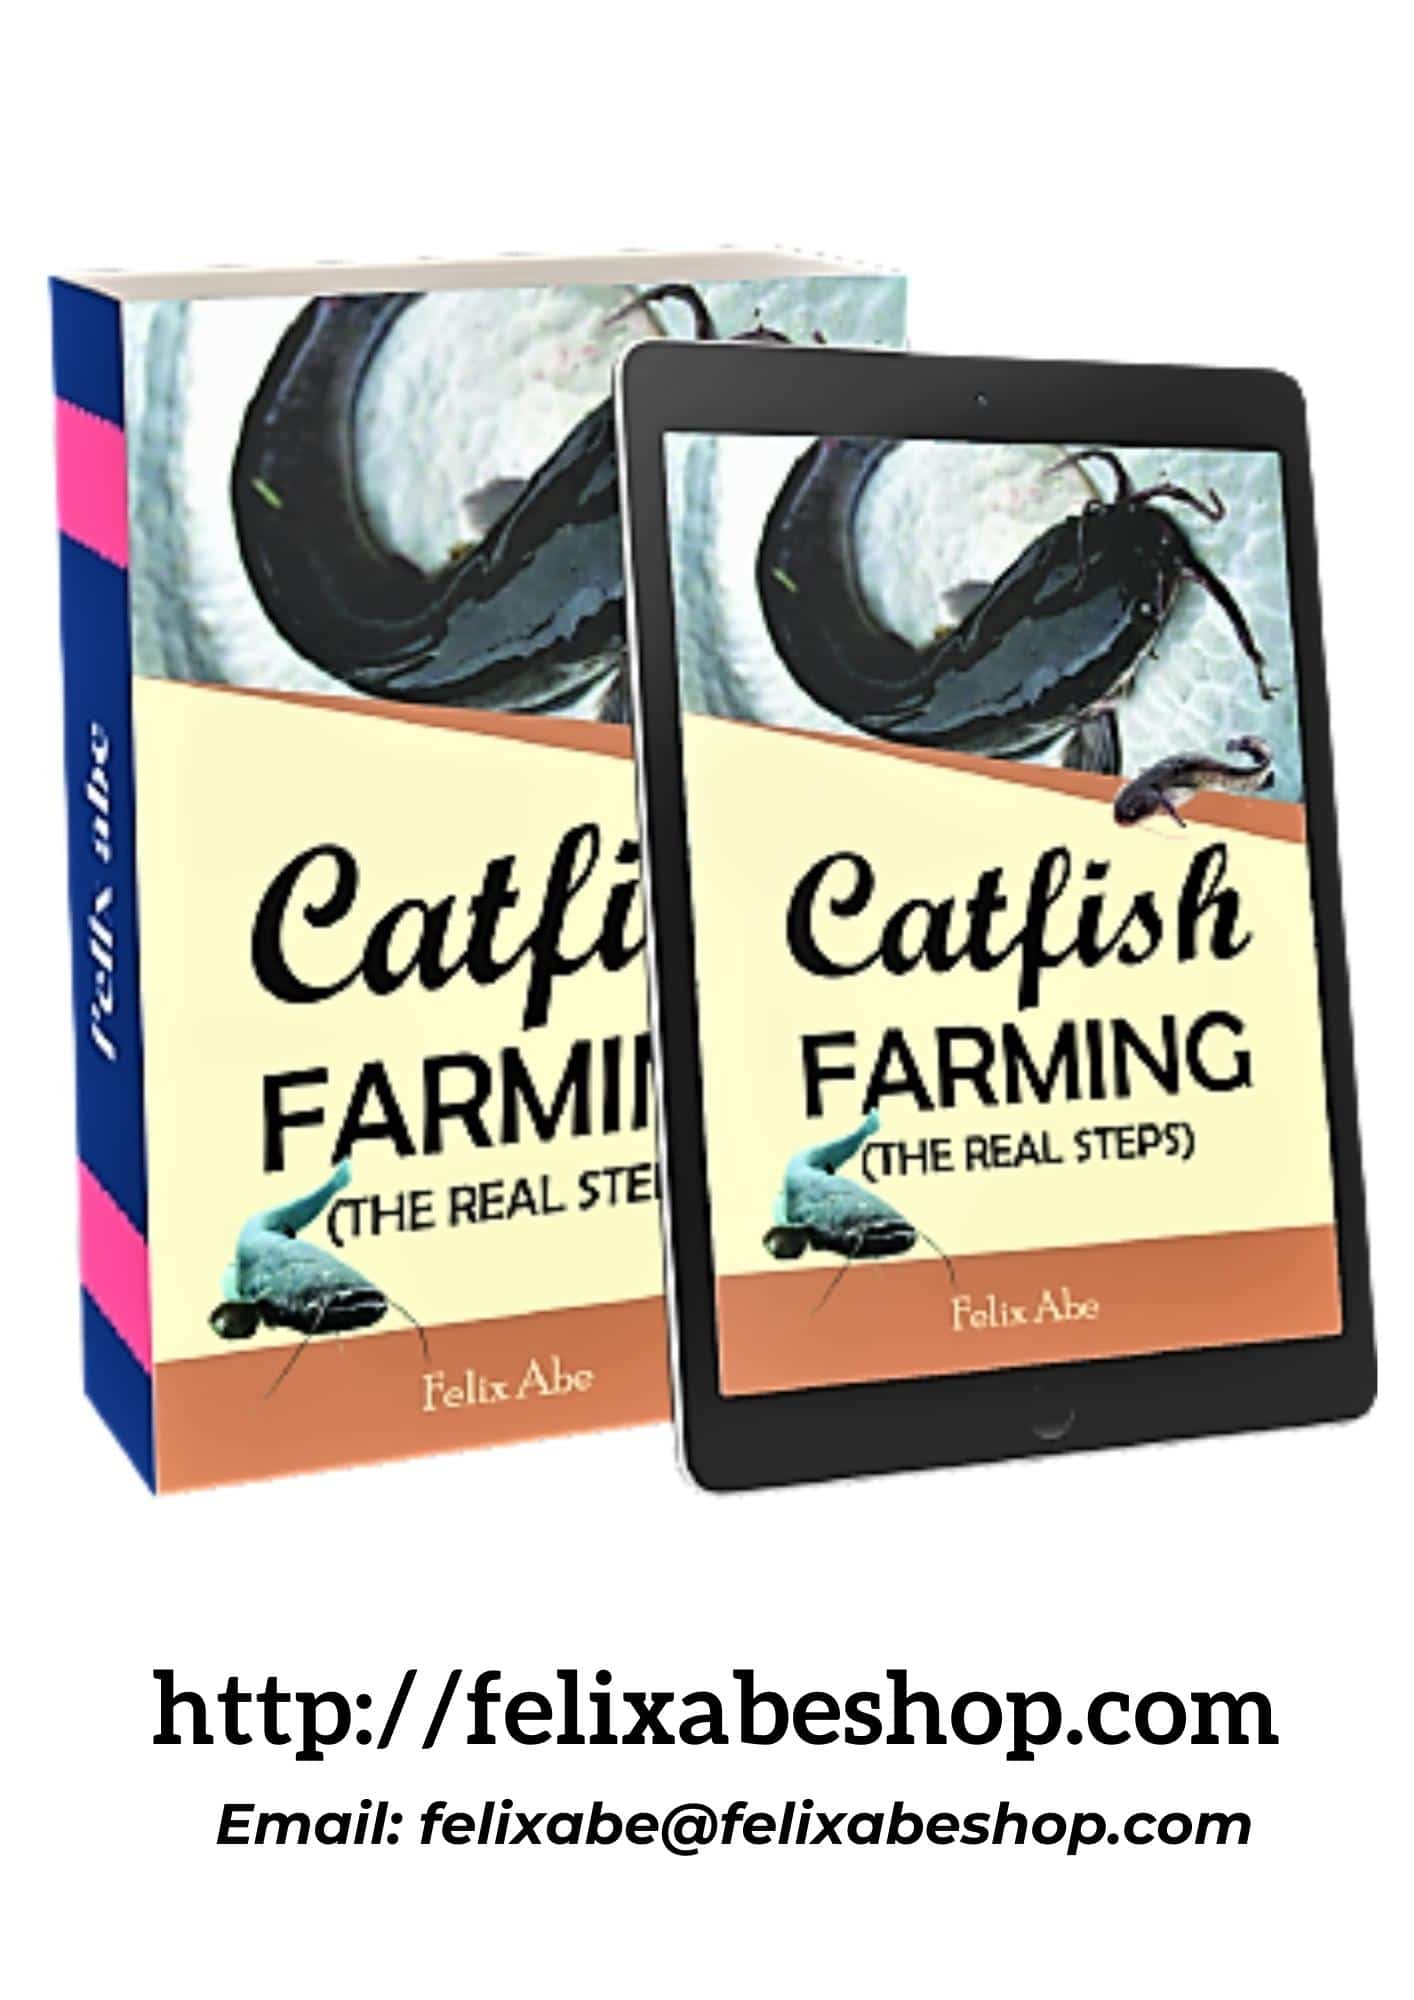 Catfish farming guide